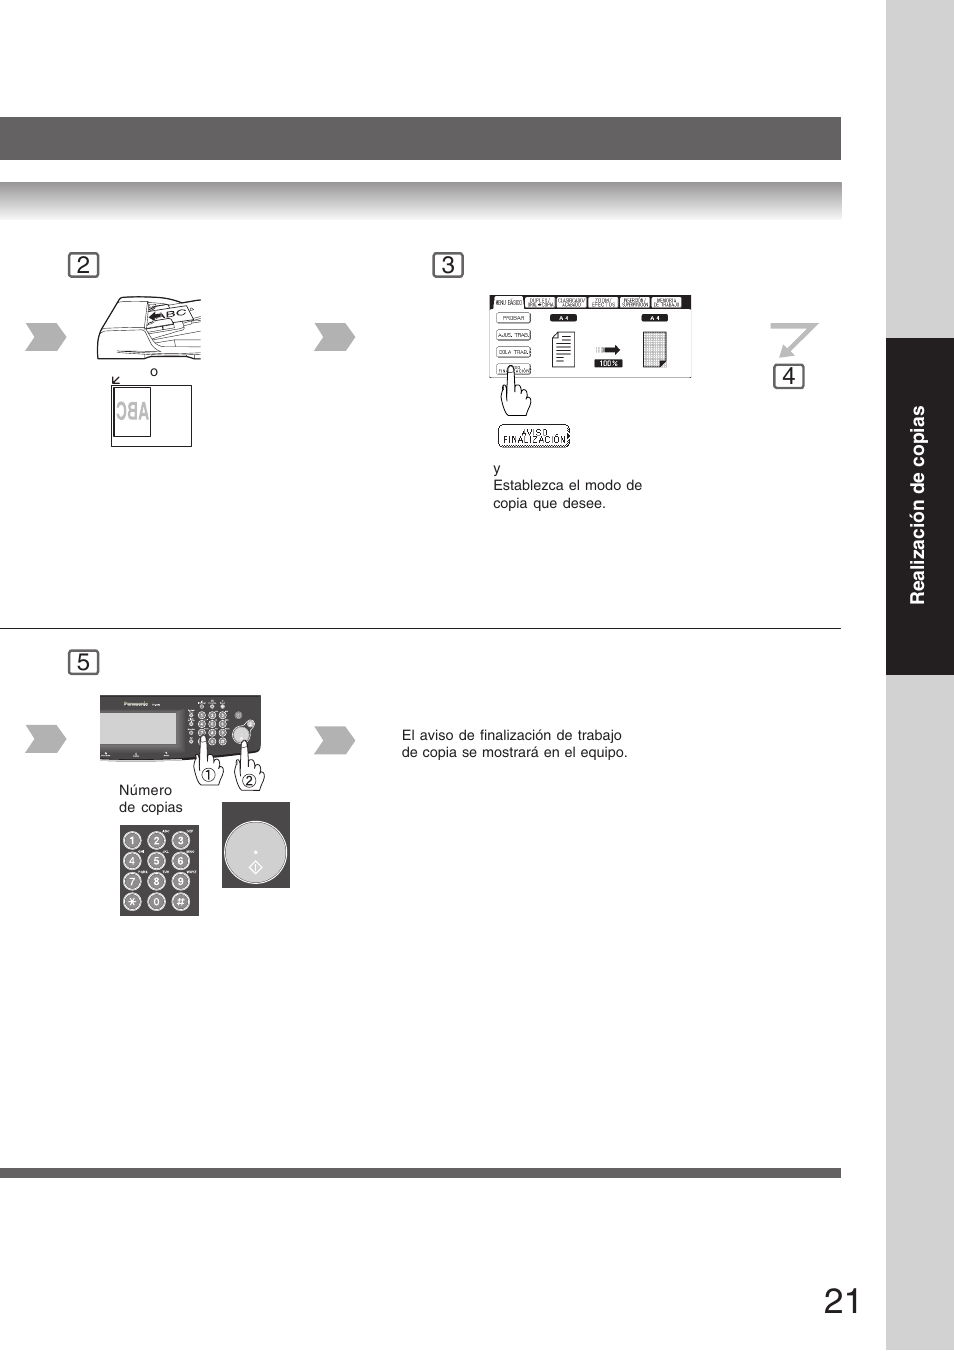 Panasonic DP8035 Manual del usuario | Página 21 / 92